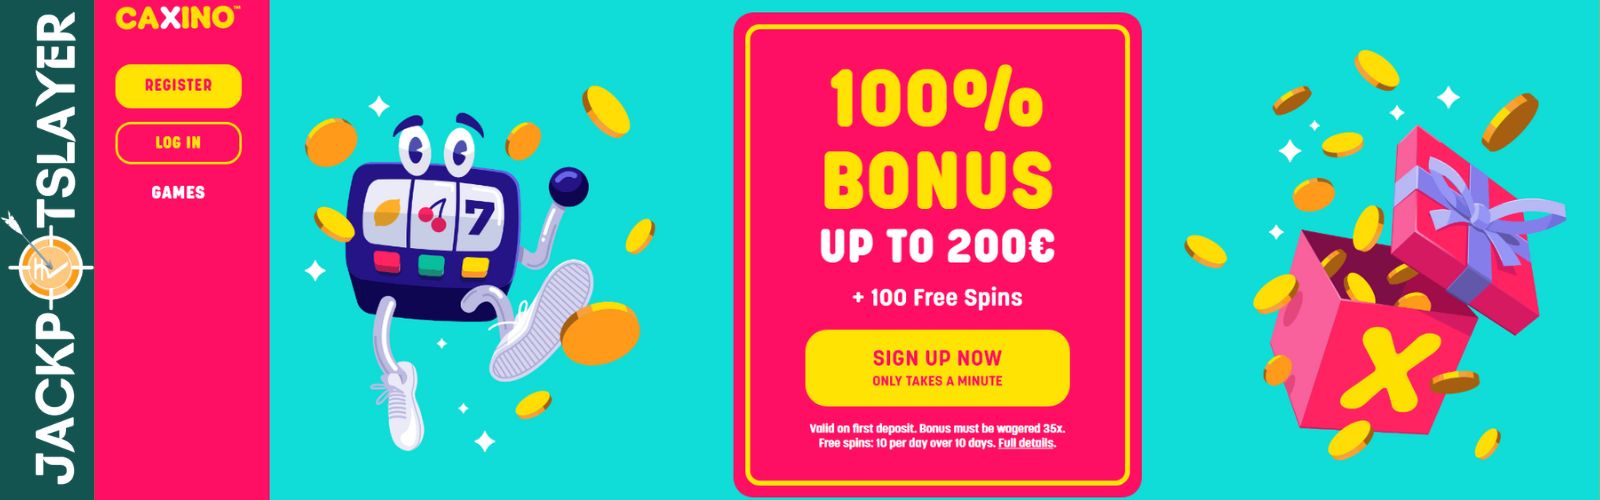 Caxino Casino | Claim A 100% Match Deposit Bonus + 100 Free Spins